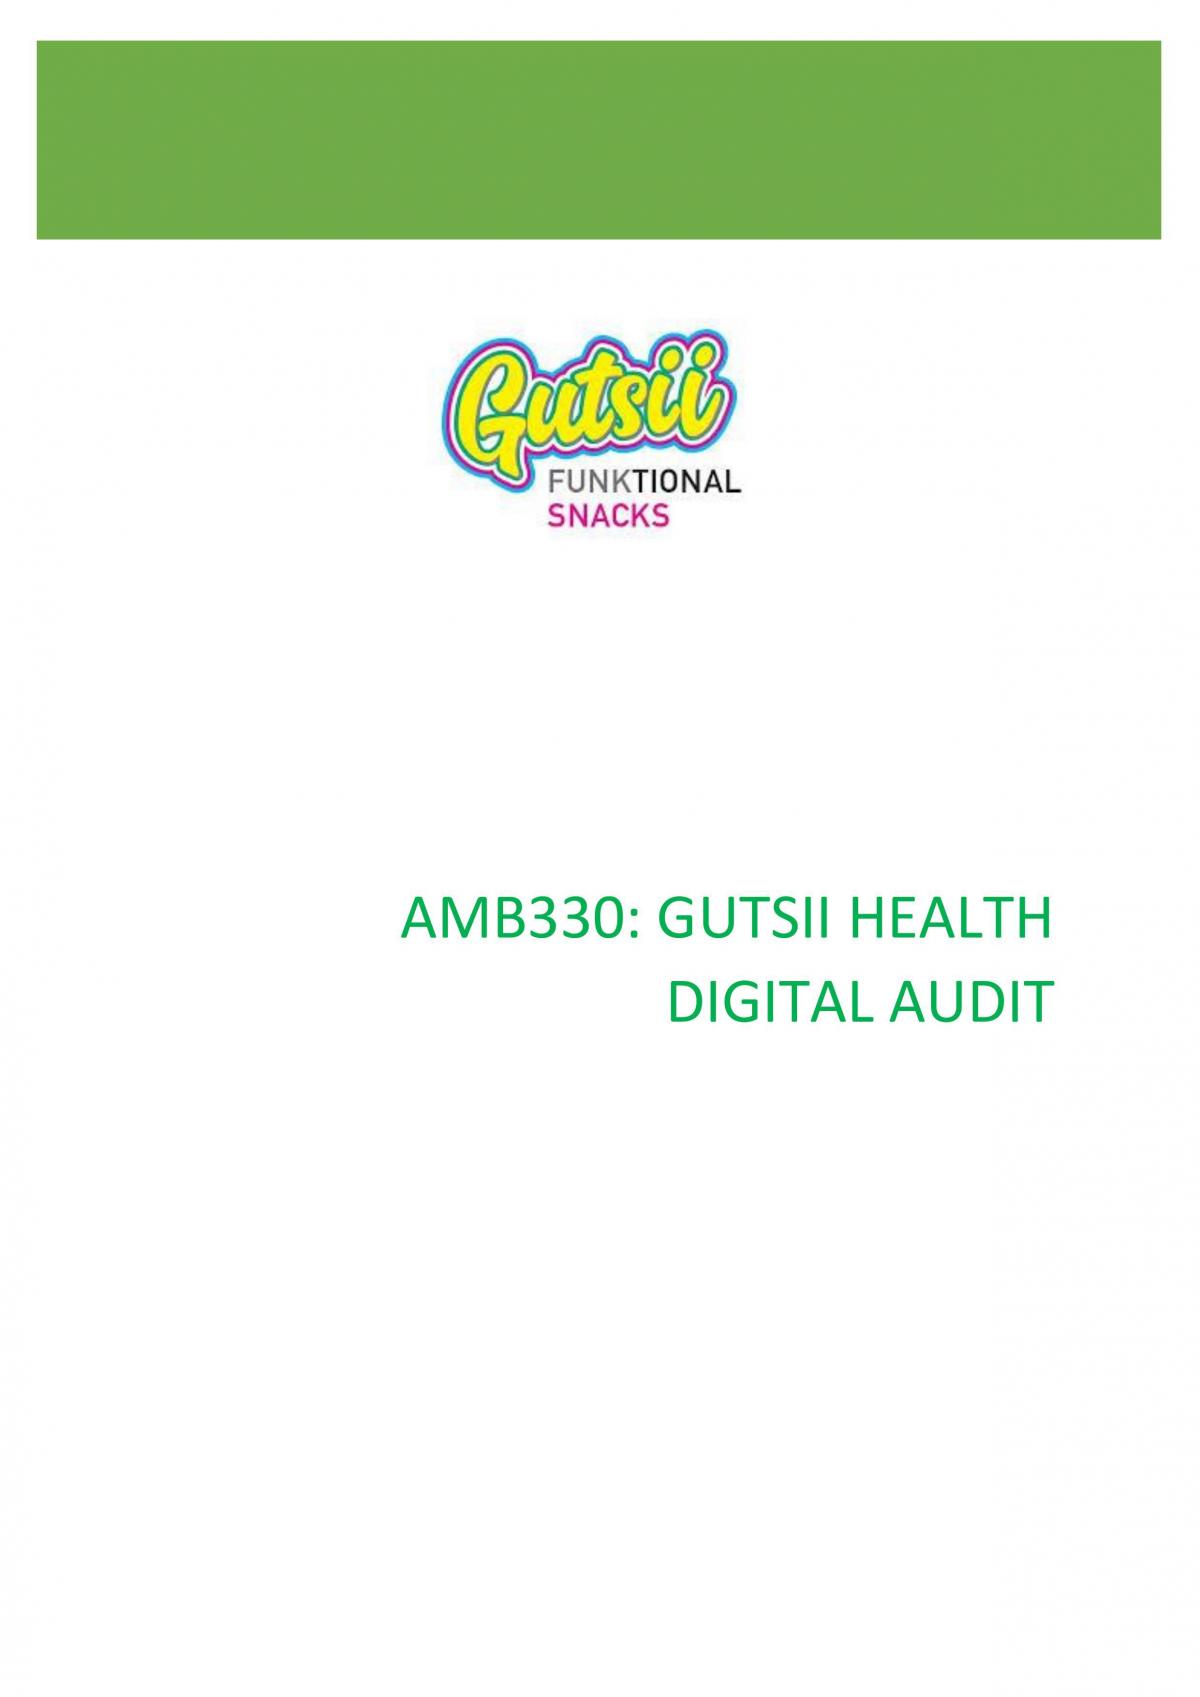 Digital Audit - Page 1